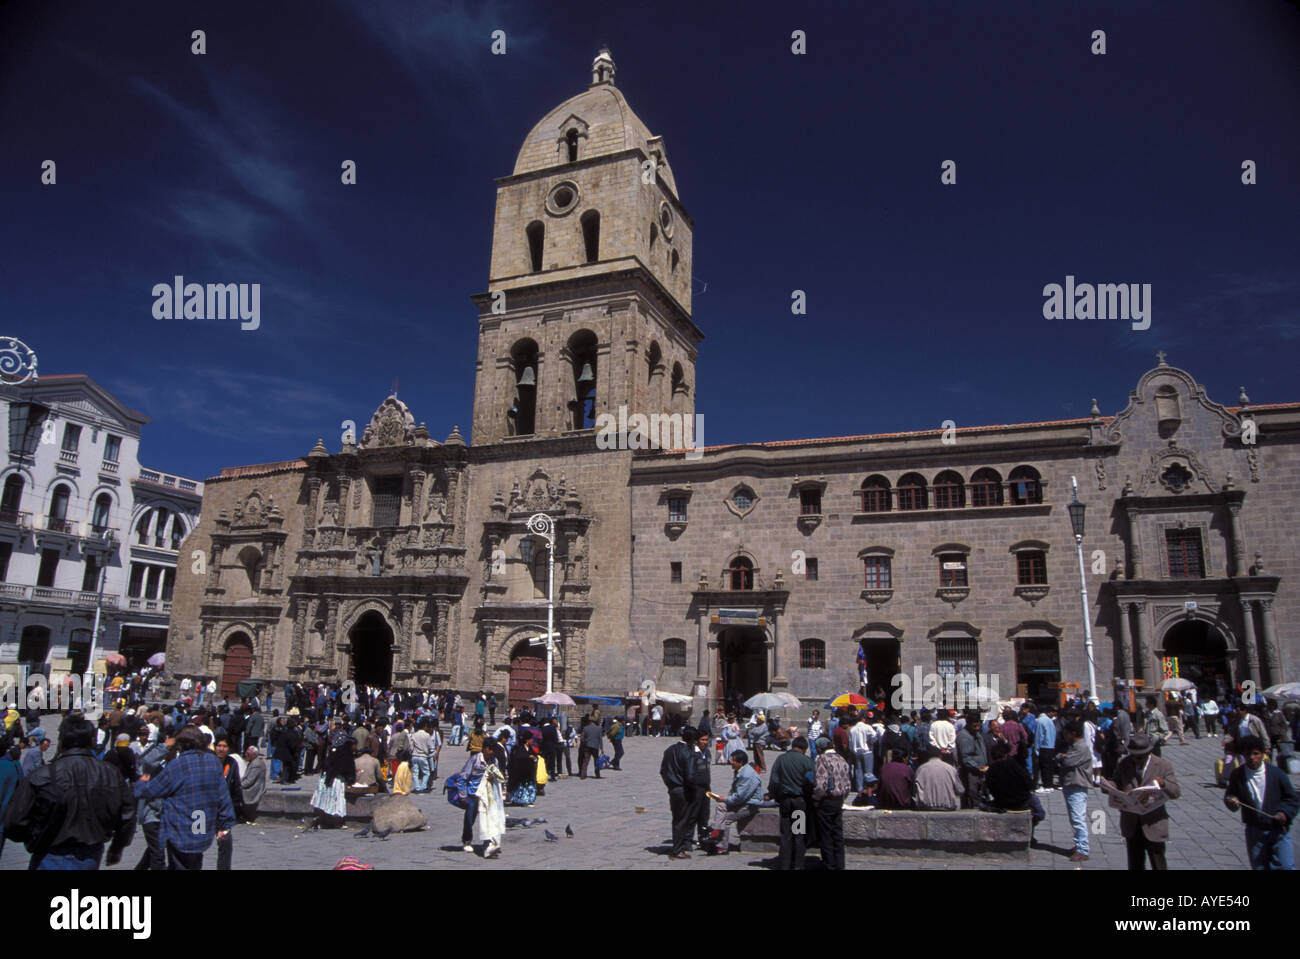 Basilica and Plaza San Francesco La Paz Capital of Bolivia Stock Photo